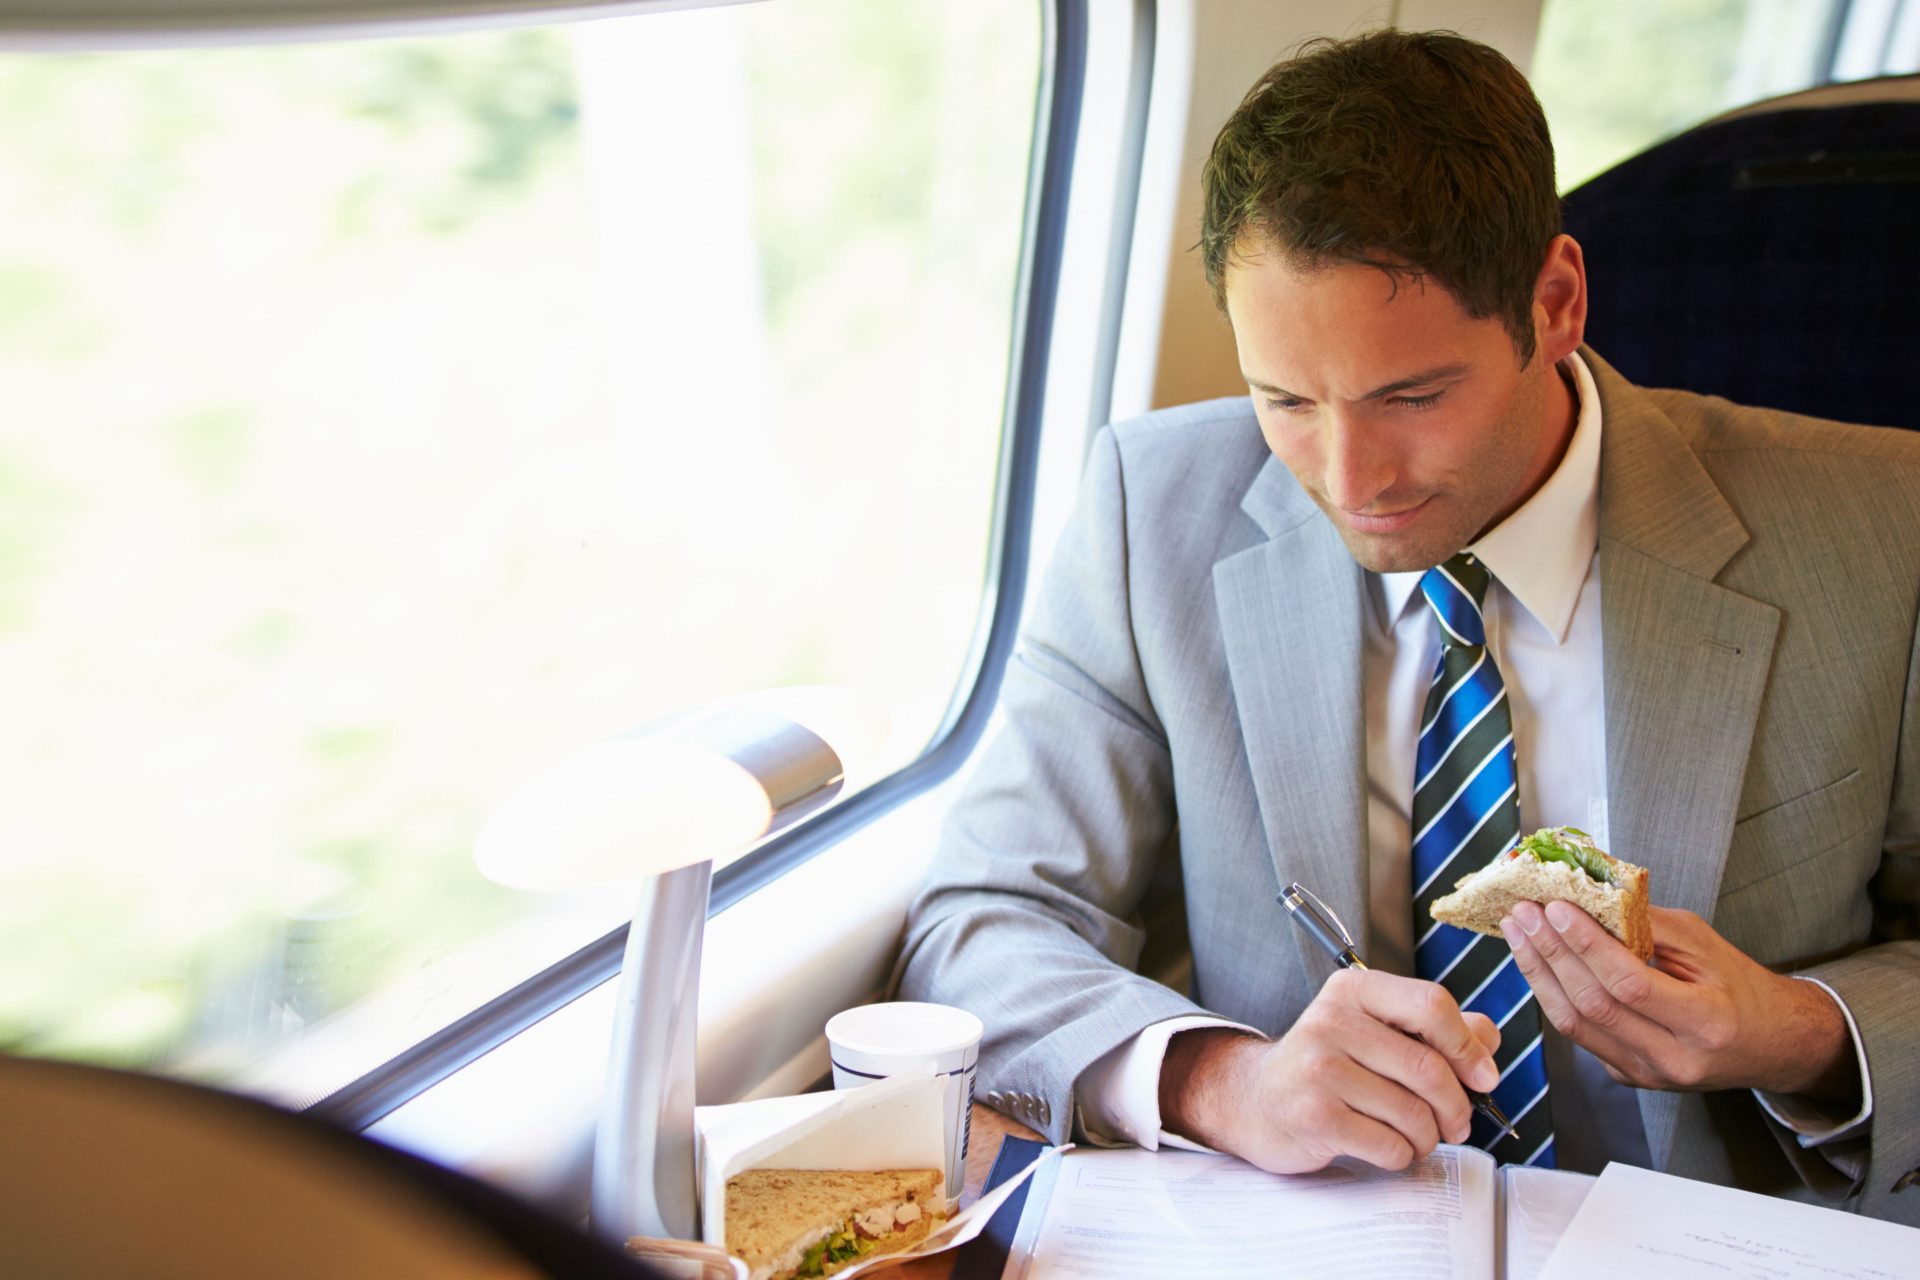 A man eats a sandwich on a train.